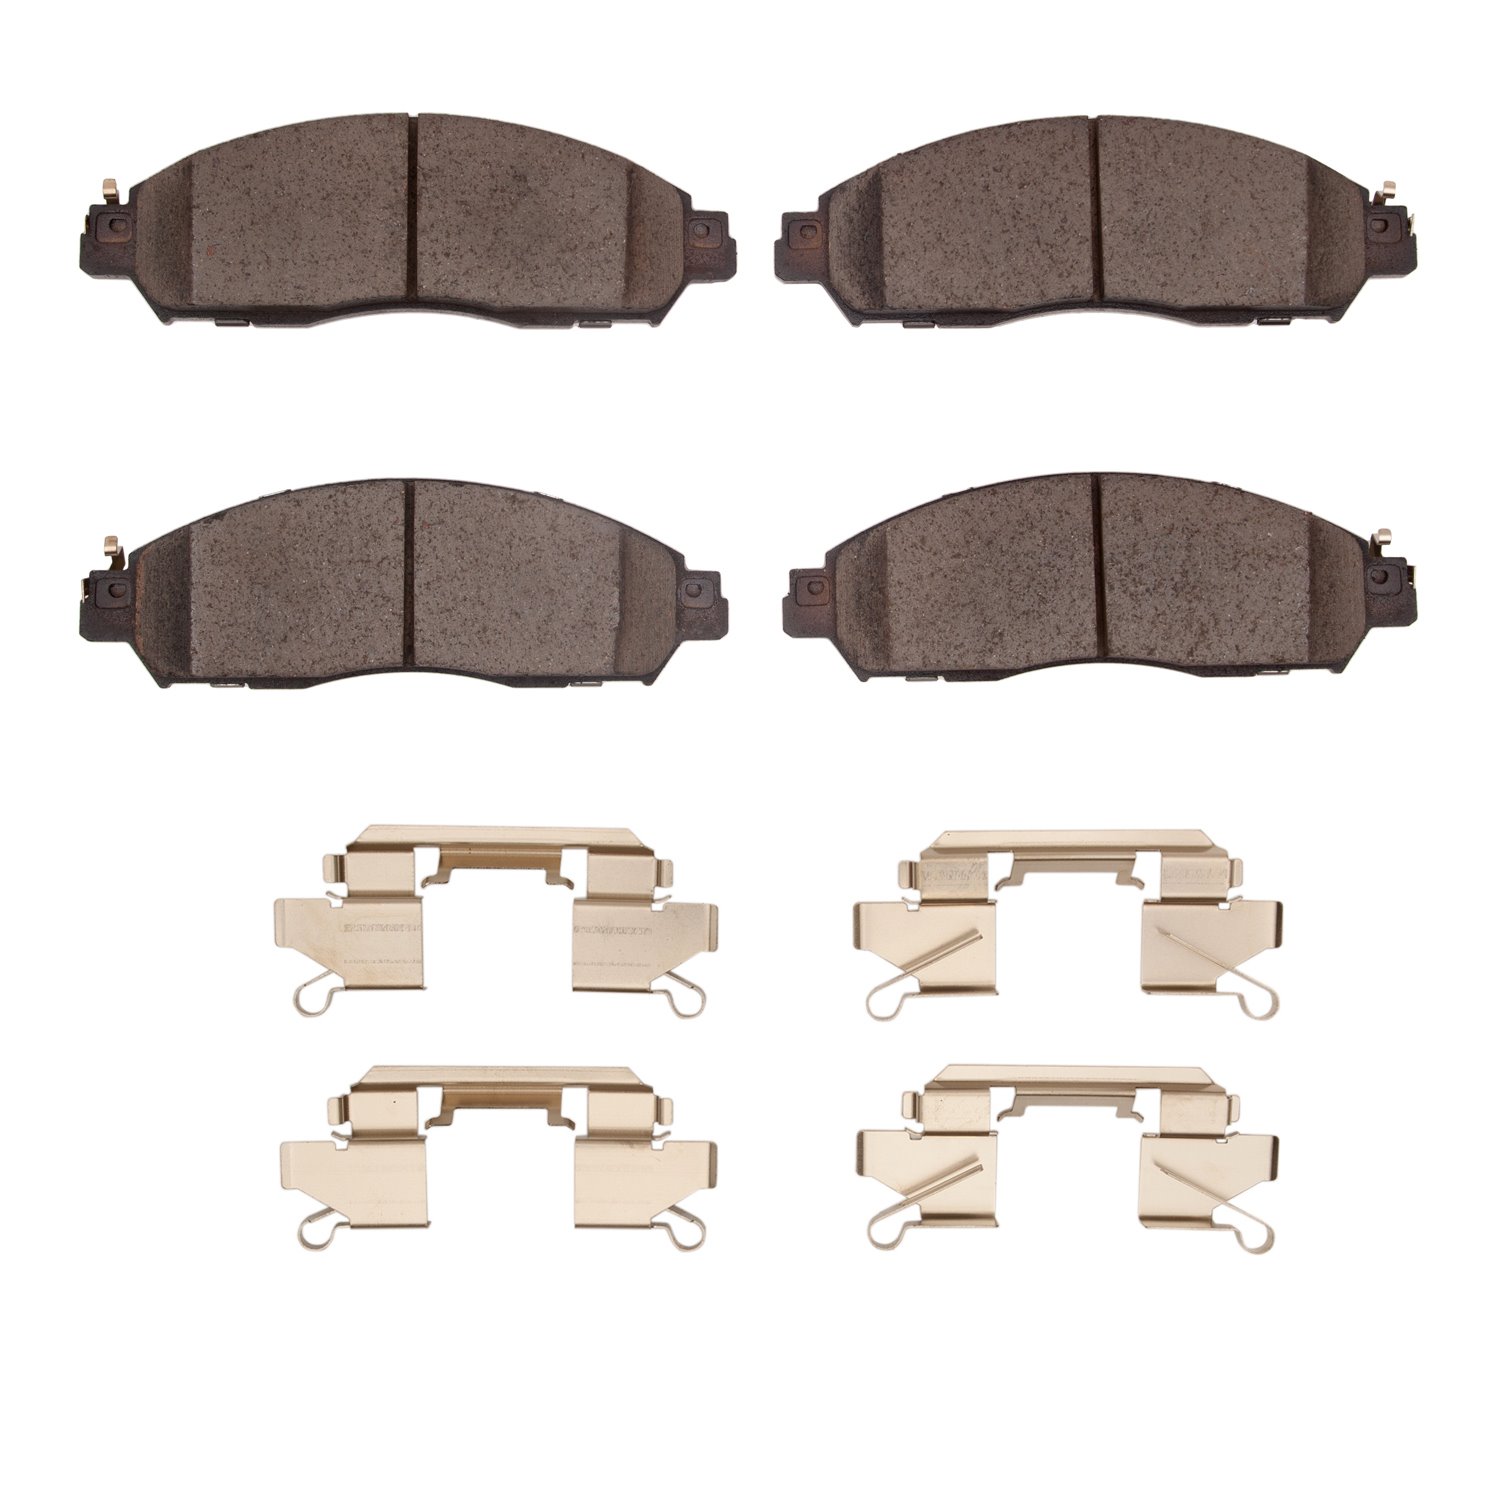 Optimum OE Brake Pads & Hardware Kit, Fits Select Infiniti/Nissan, Position: Front